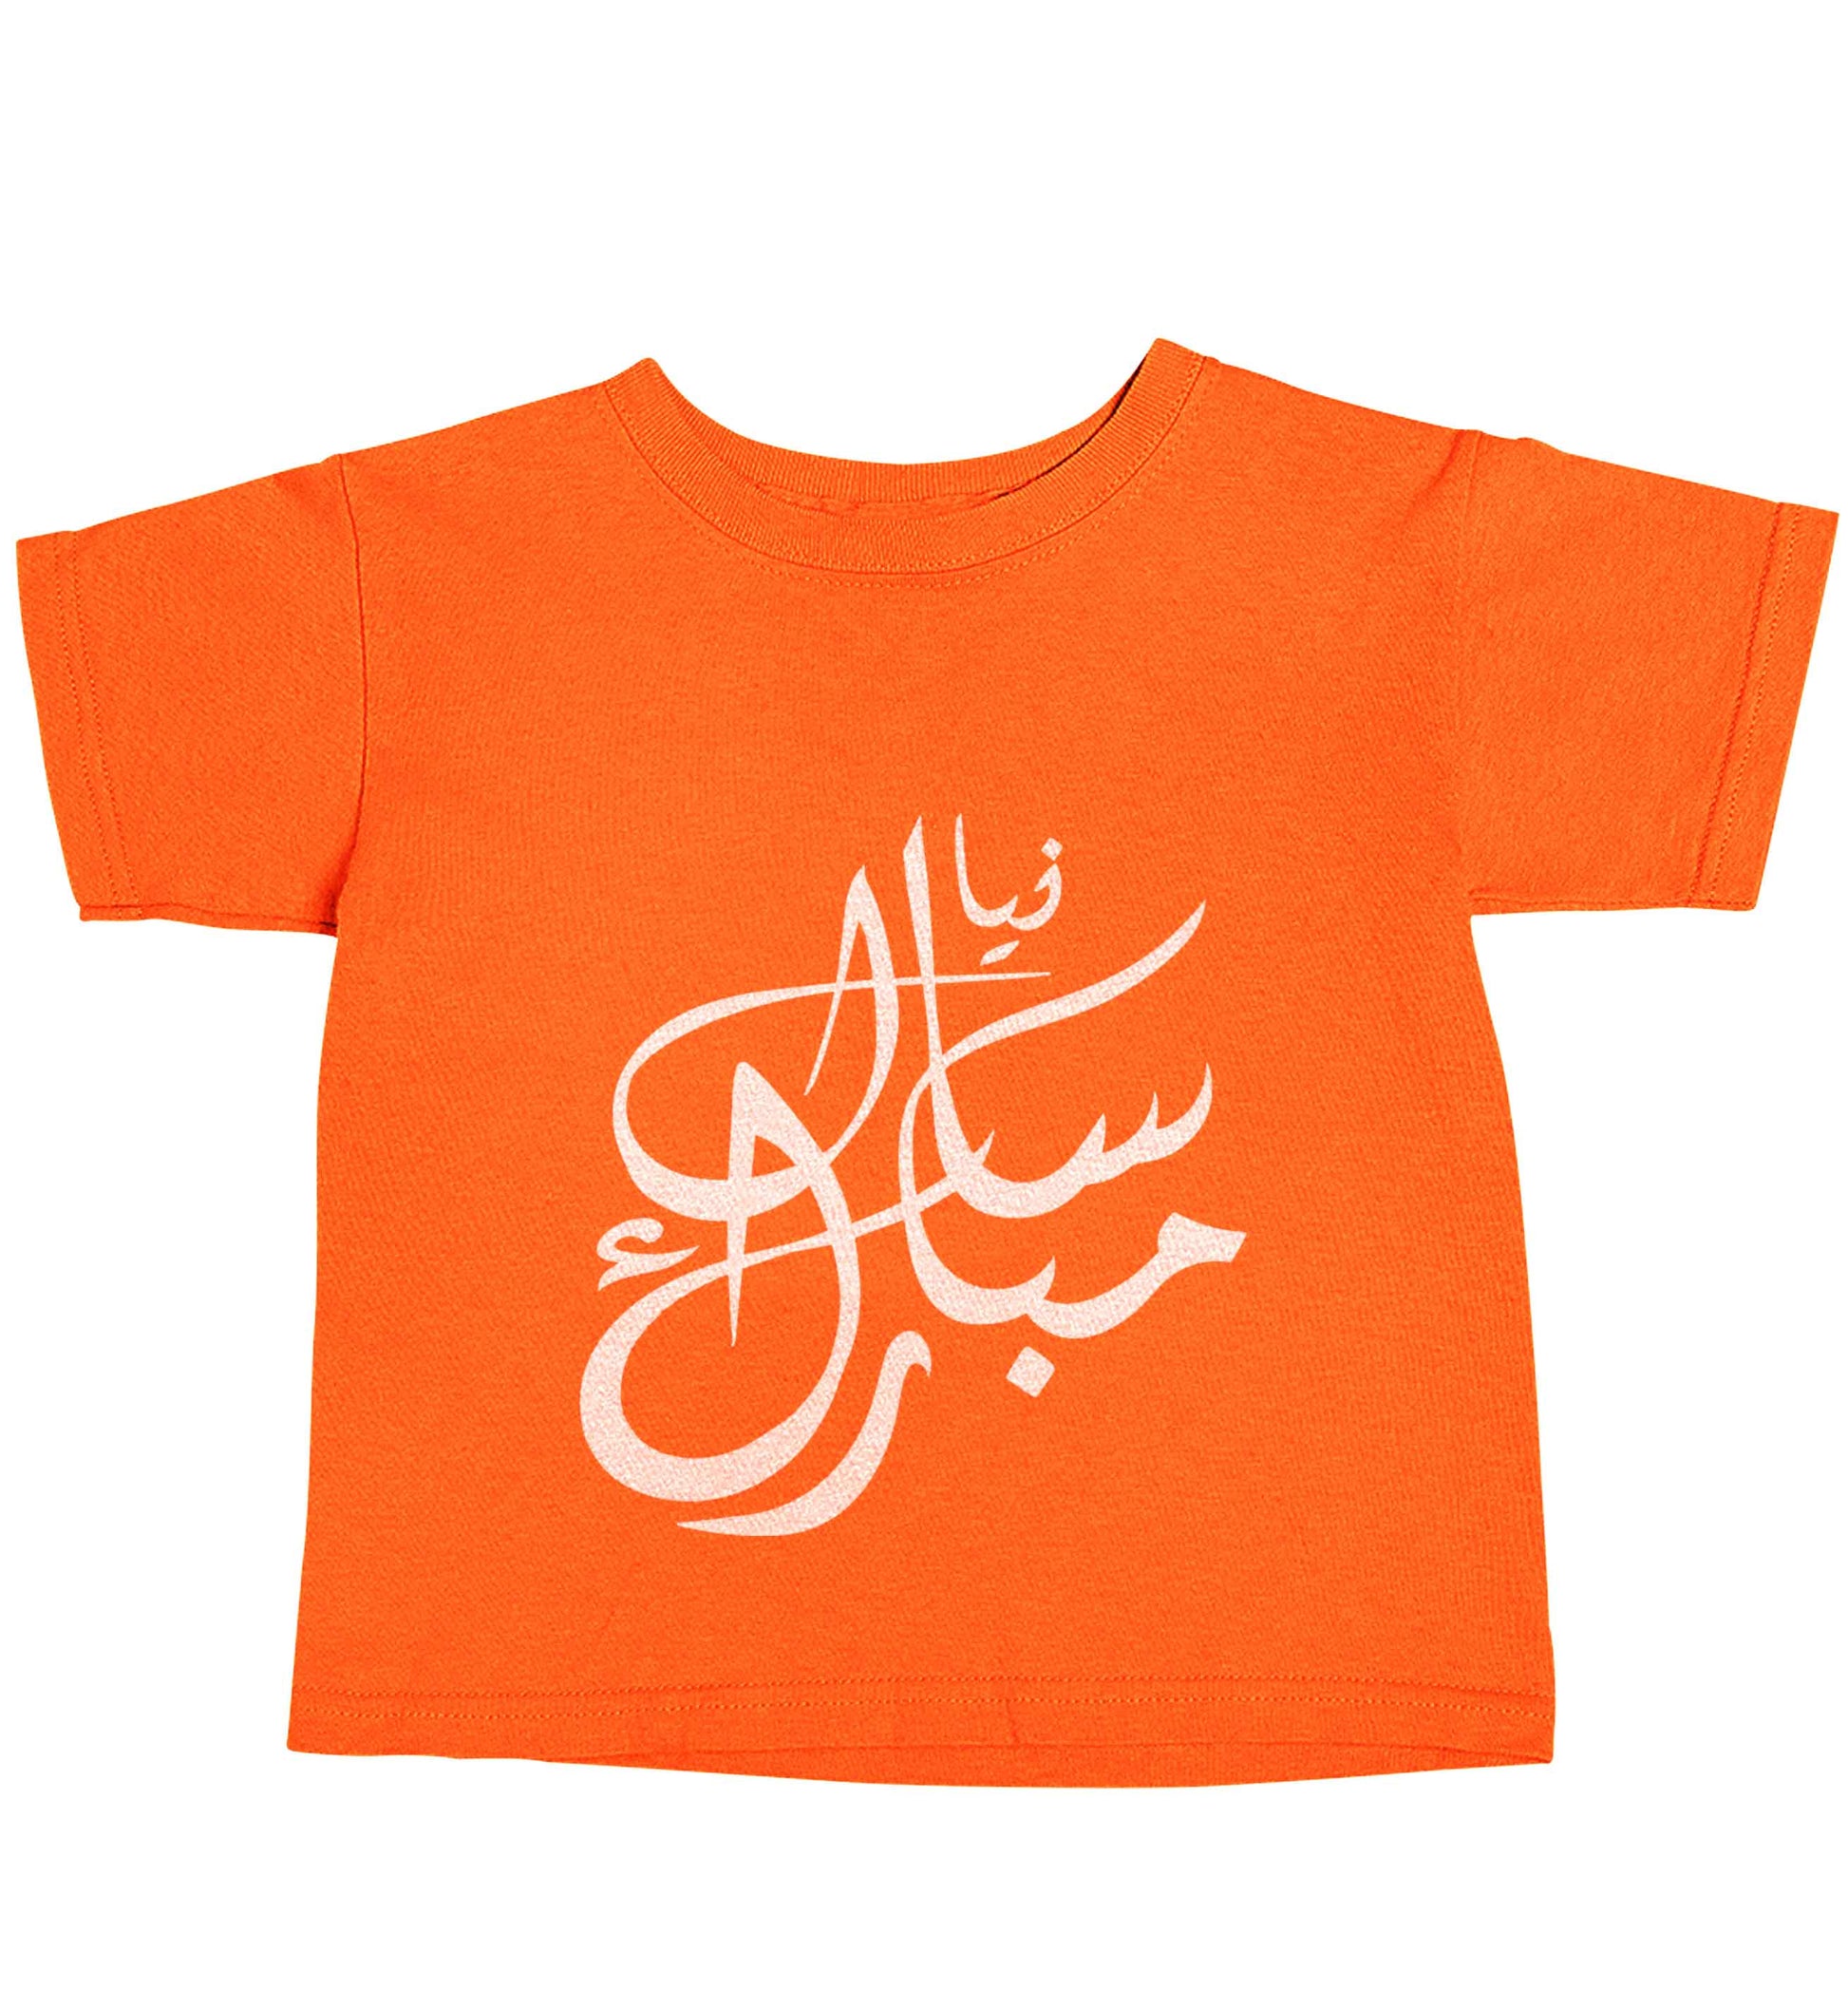 Urdu Naya saal mubarak orange baby toddler Tshirt 2 Years